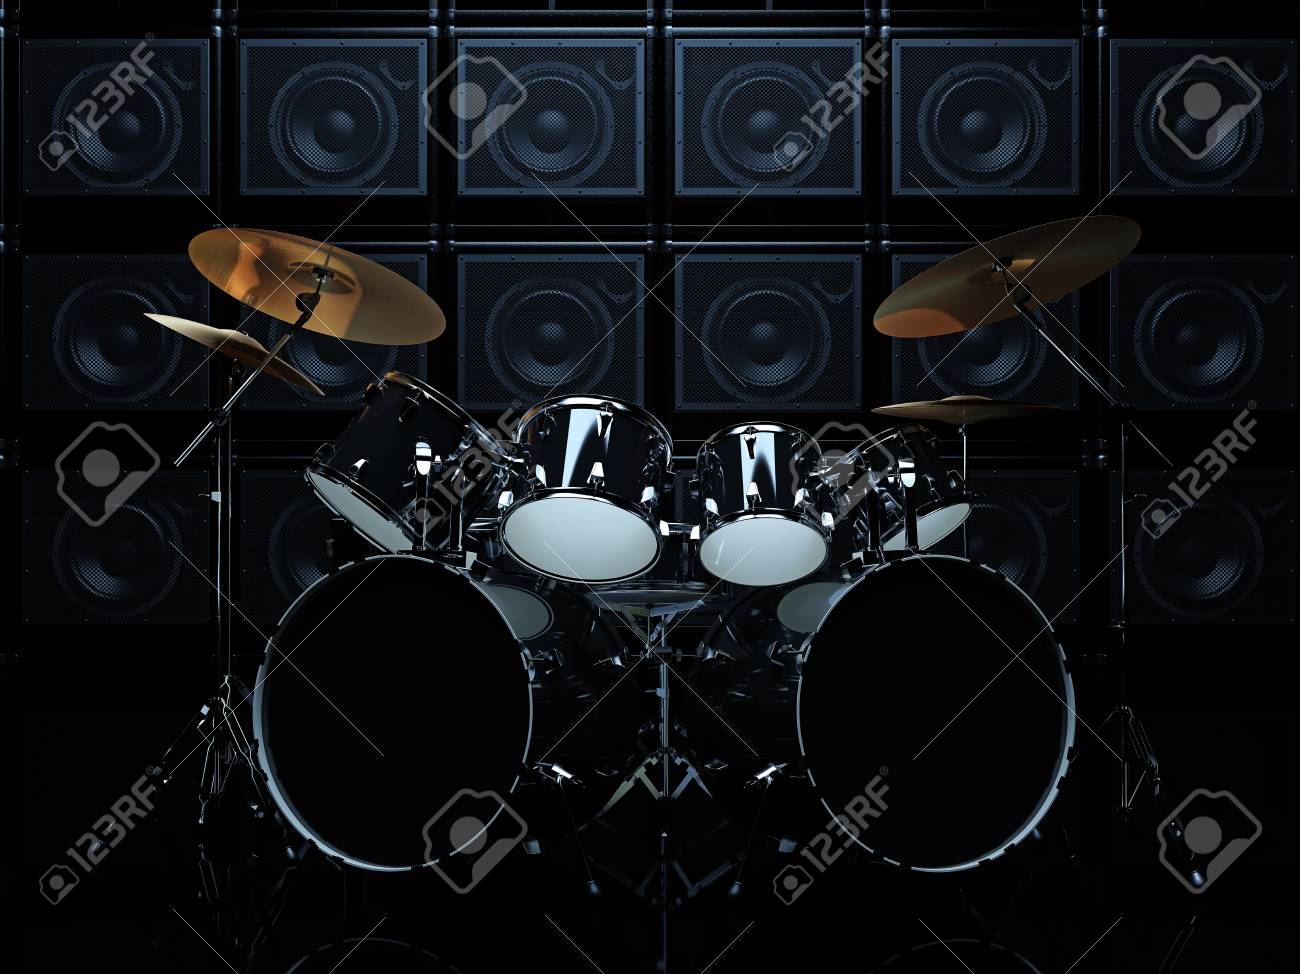 Black Drum Set In A Dark Room On Background Of Guitar Amps